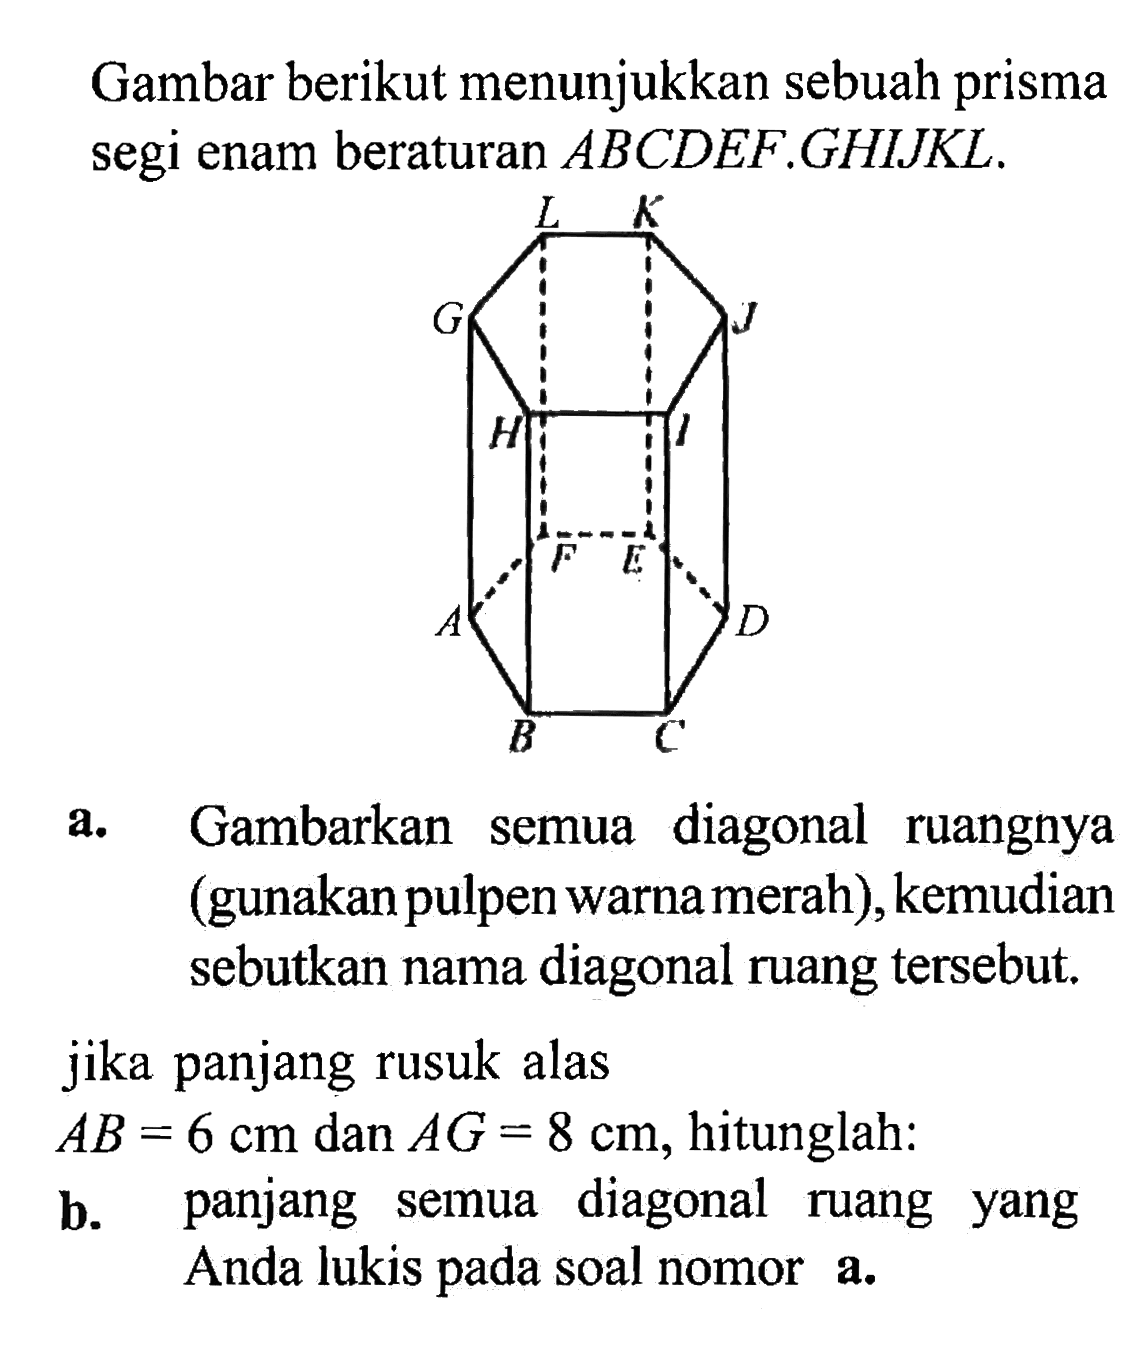 Gambar berikut menunjukkan sebuah prisma segi enam beraturan ABCDEF.GHIJKL. L K G J H I F E A D B C a. Gambarkan semua diagonal ruangnya (gunakan pulpen warna merah), kemudian sebutkan nama diagonal ruang tersebut. jika panjang rusuk alas AB = 6 cm dan AG = 8 cm, hitunglah: b. panjang semua diagonal ruang yang Anda lukis pada soal nomor a.